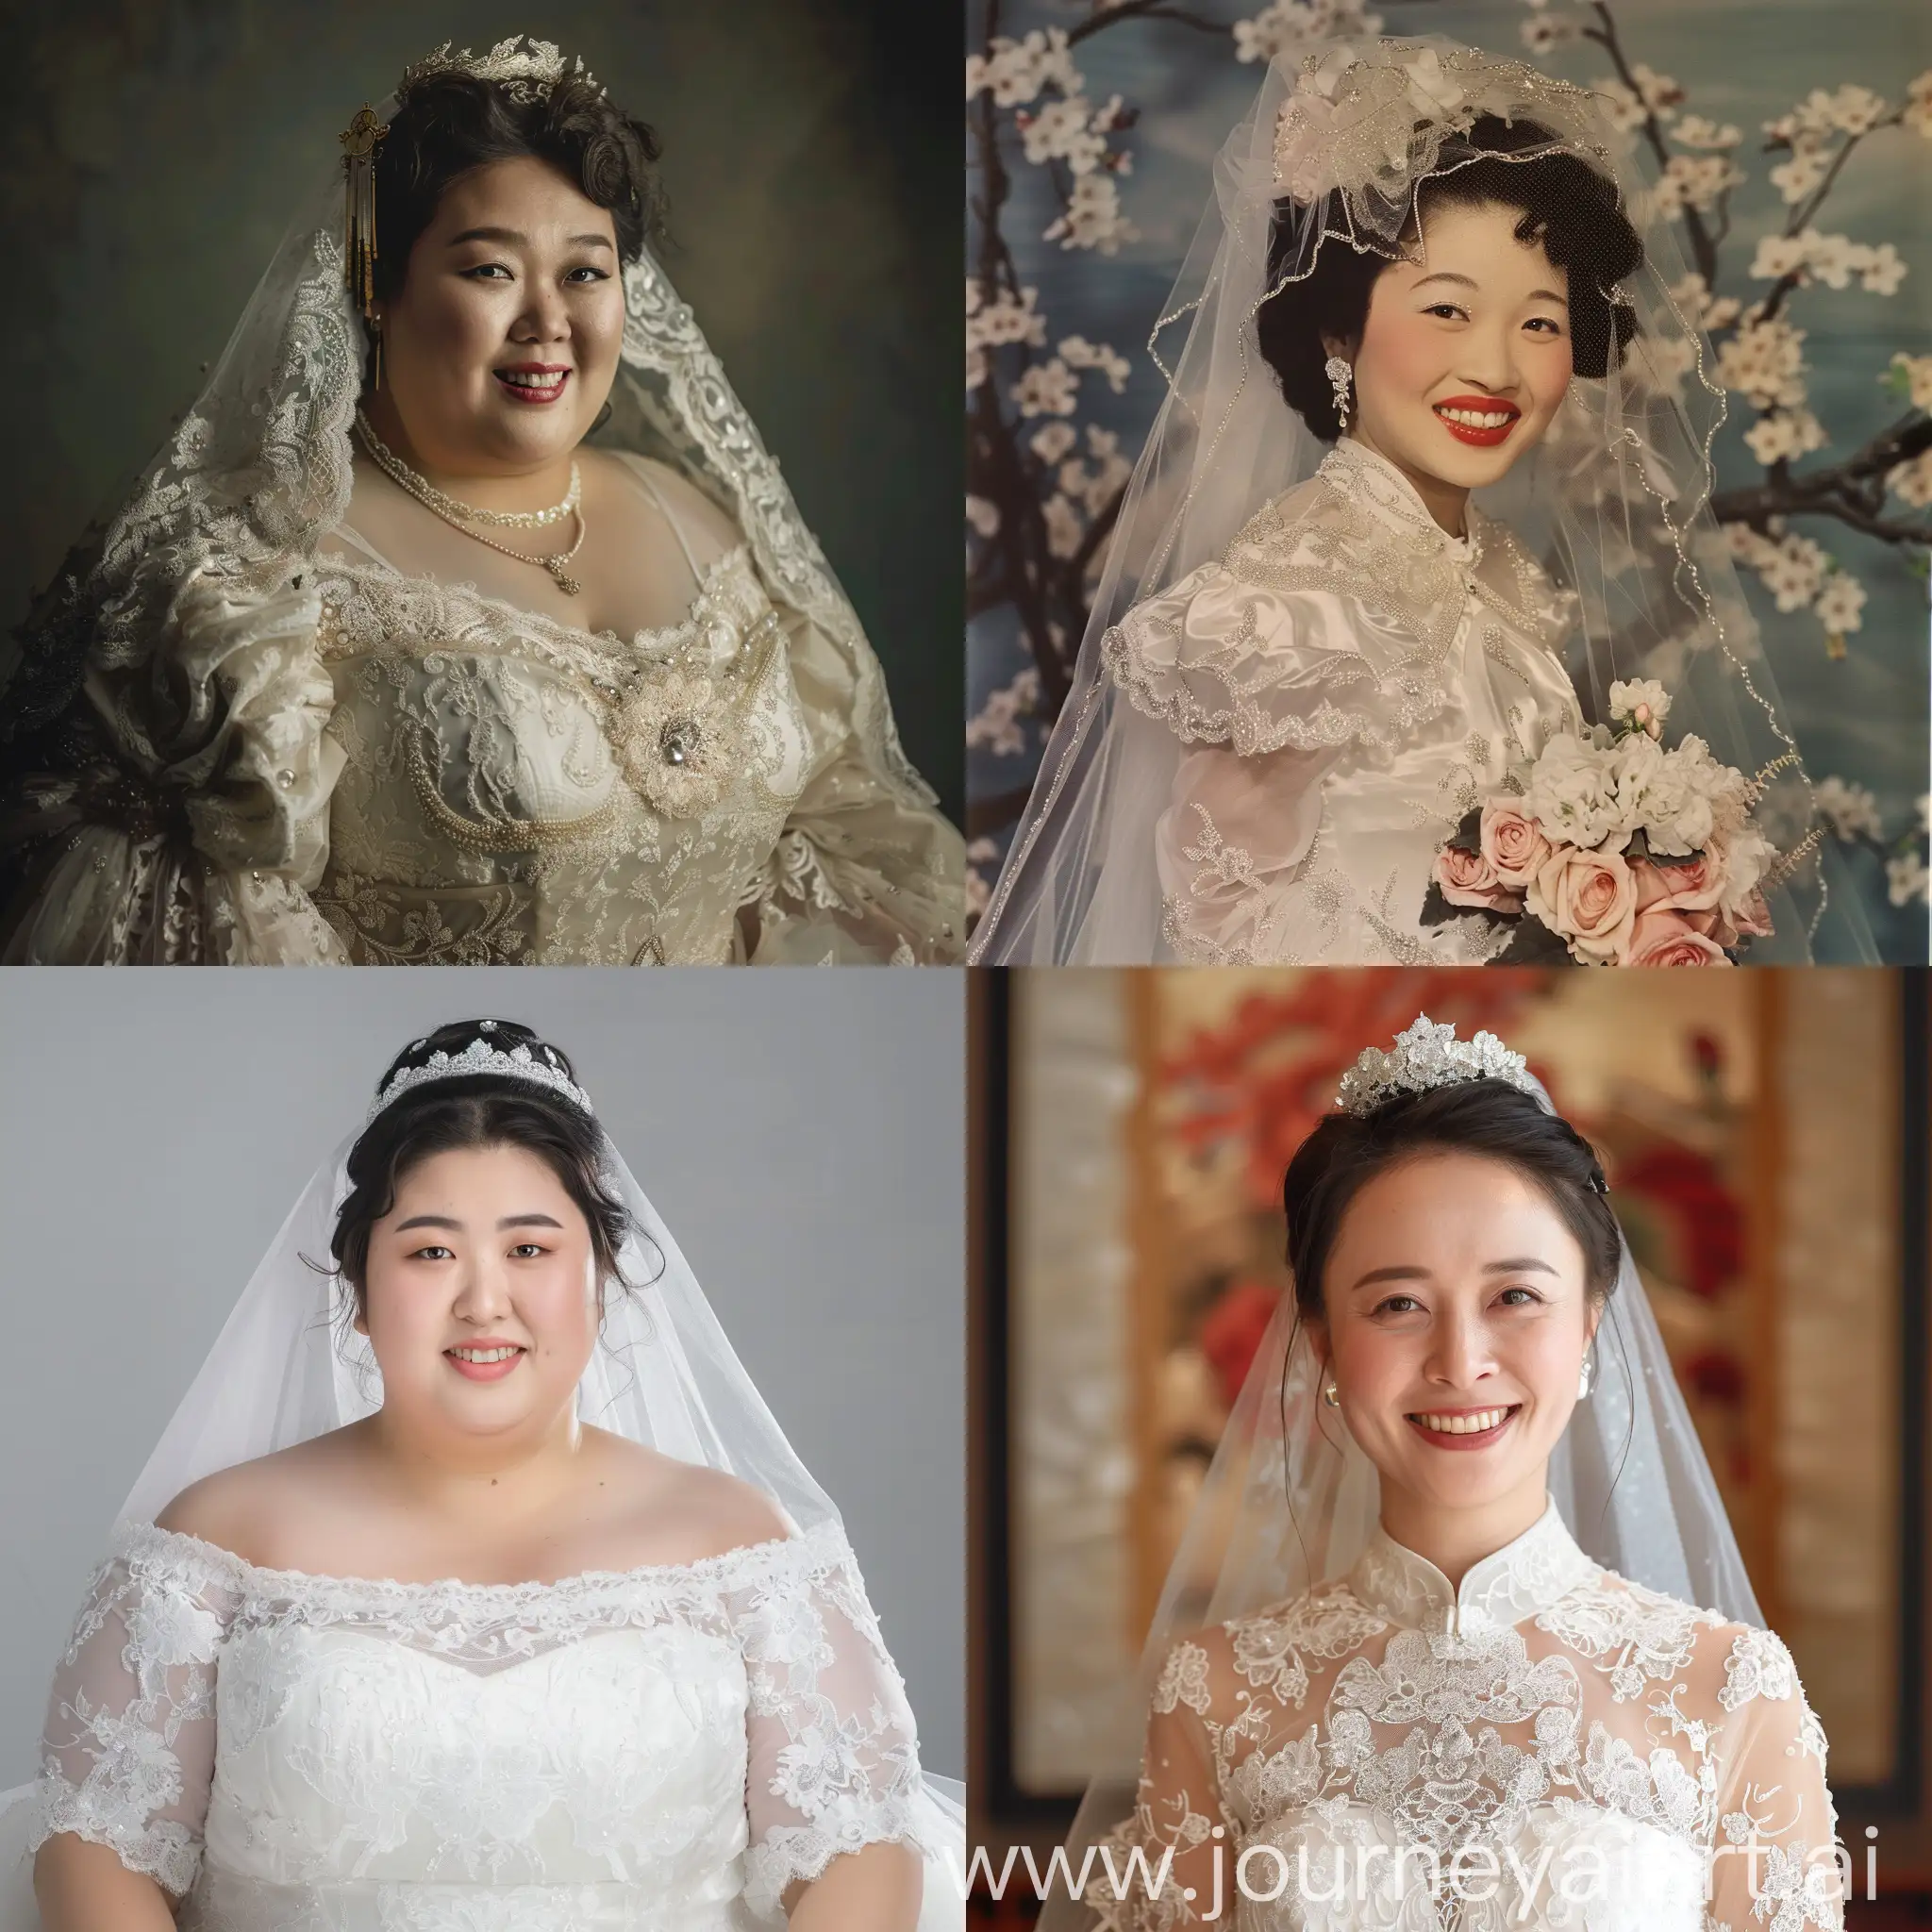 Joyful-PlusSize-Asian-Bride-in-Elegant-Wedding-Dress